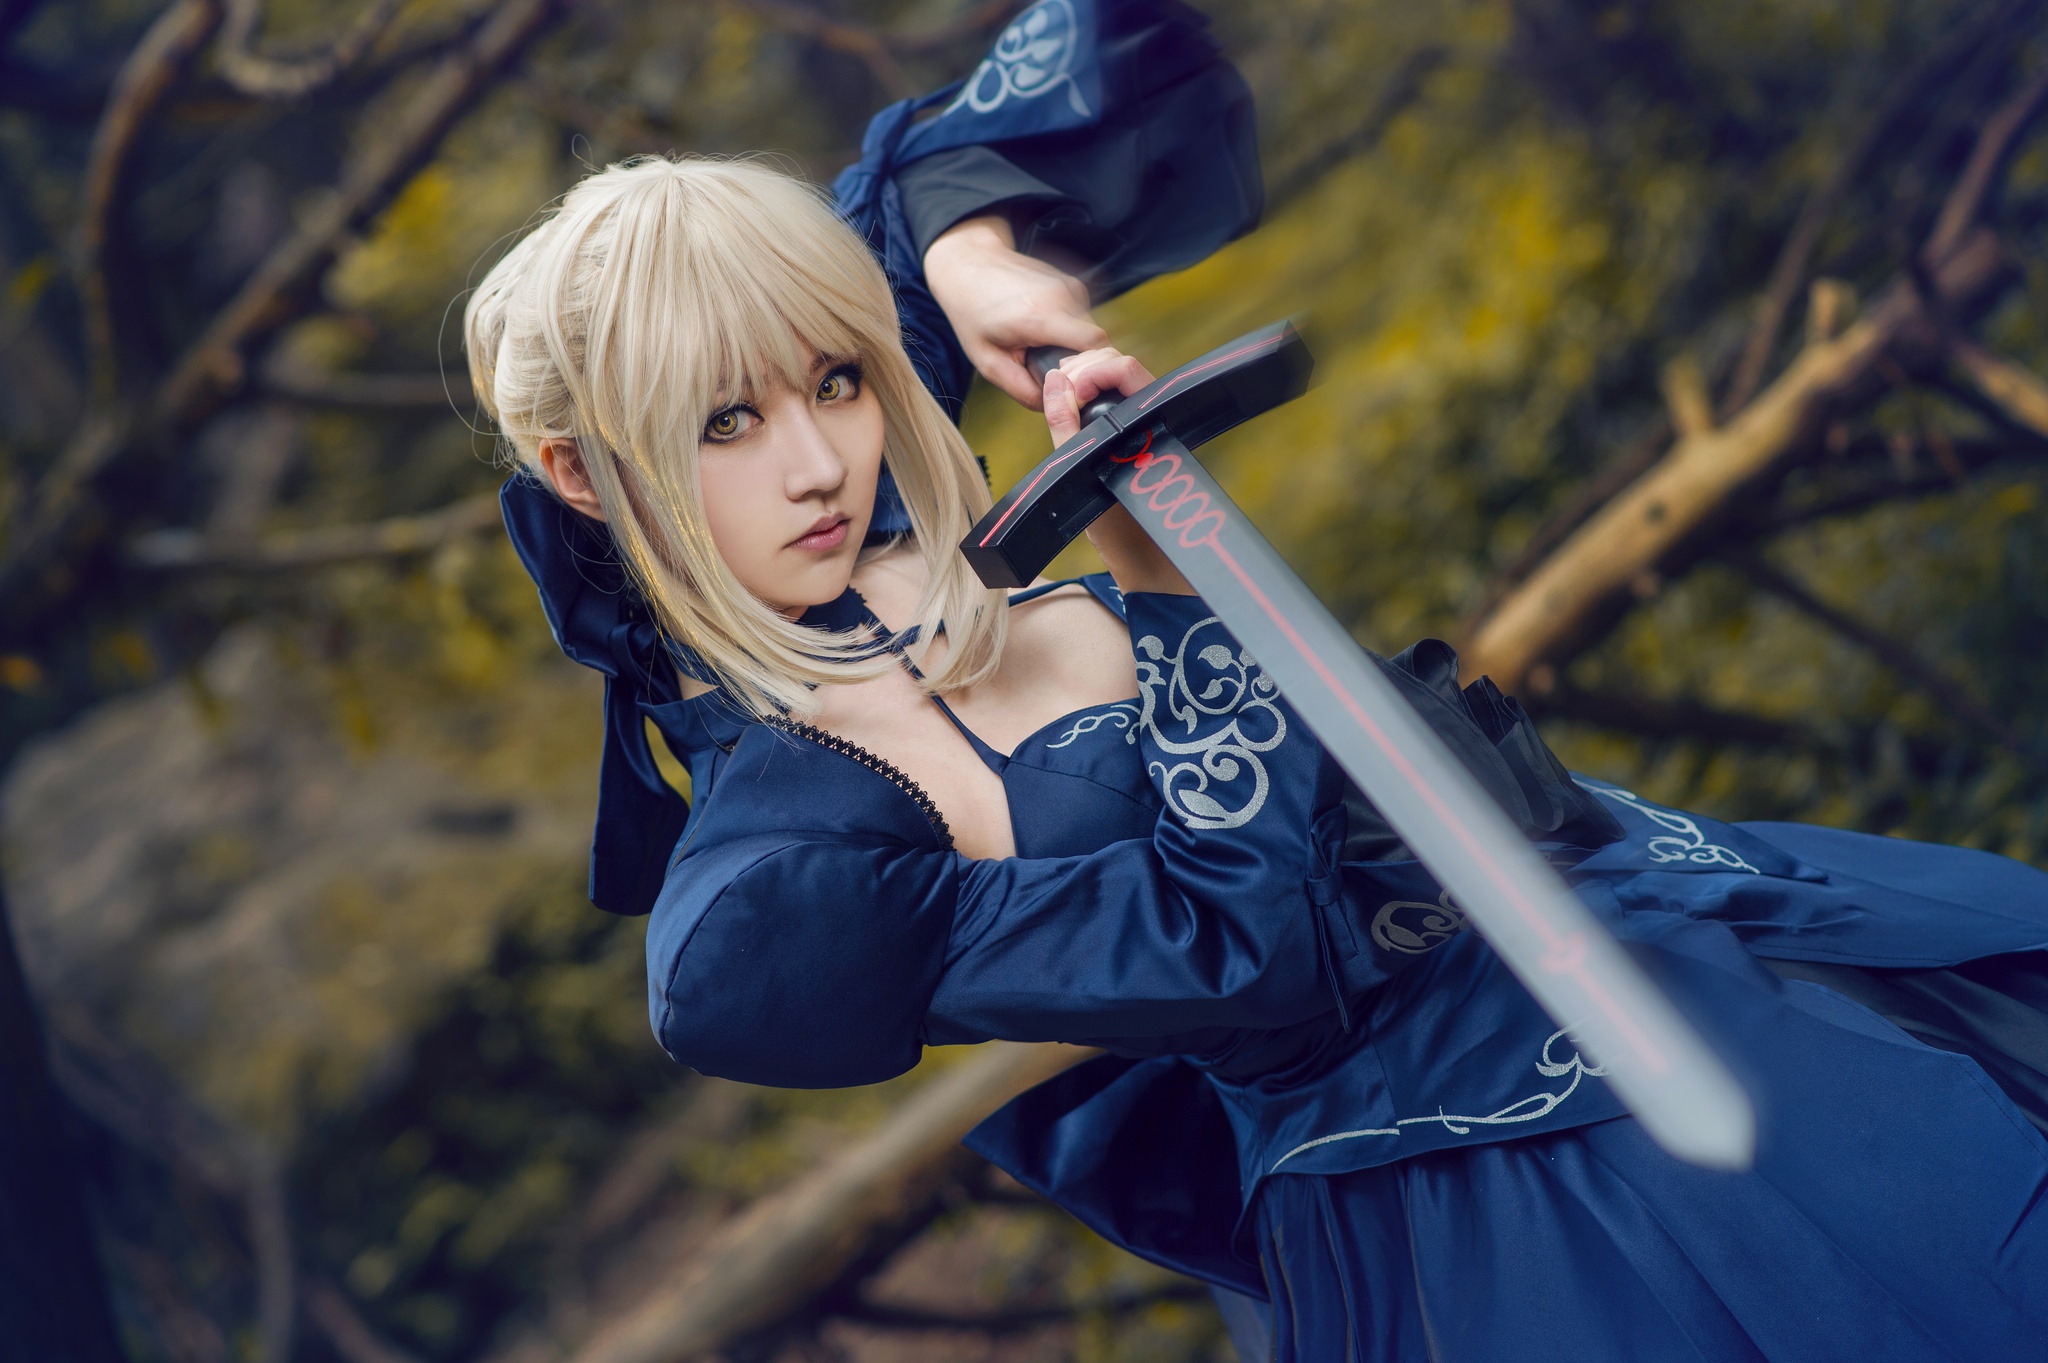 People 2048x1363 cosplay fantasy girl women model sword Asian blonde blue dress Saber Alter Fate series